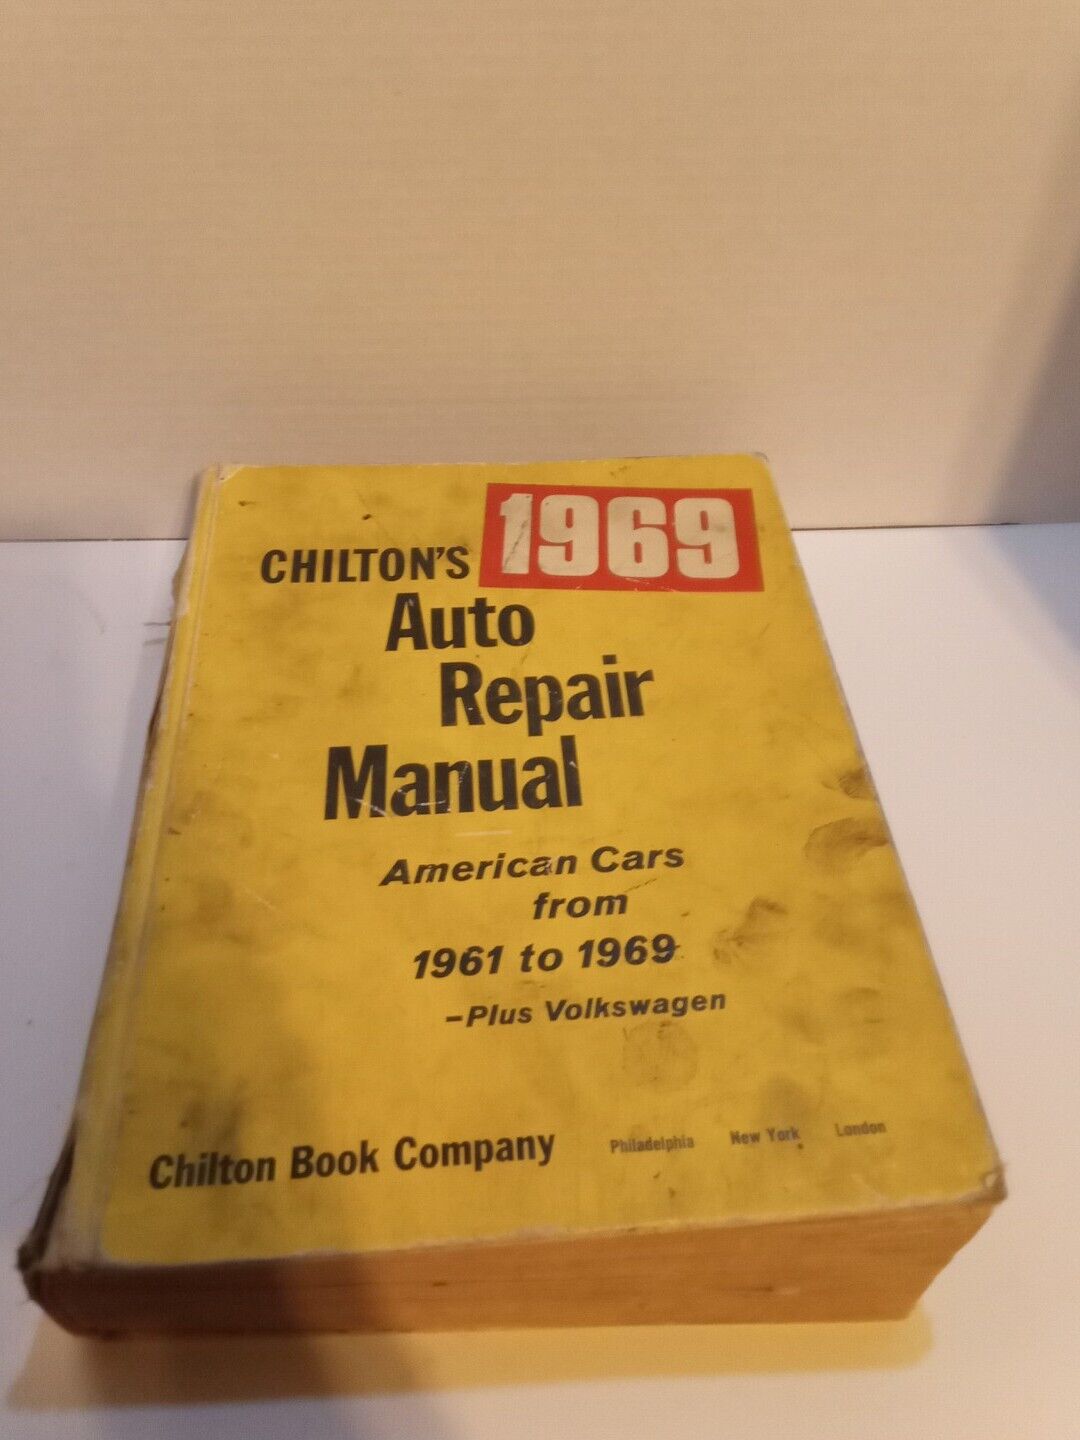 VINTAGE 1969 Chiltons Auto Repair Manual 1961-1969 American Cars & Volkswagen 